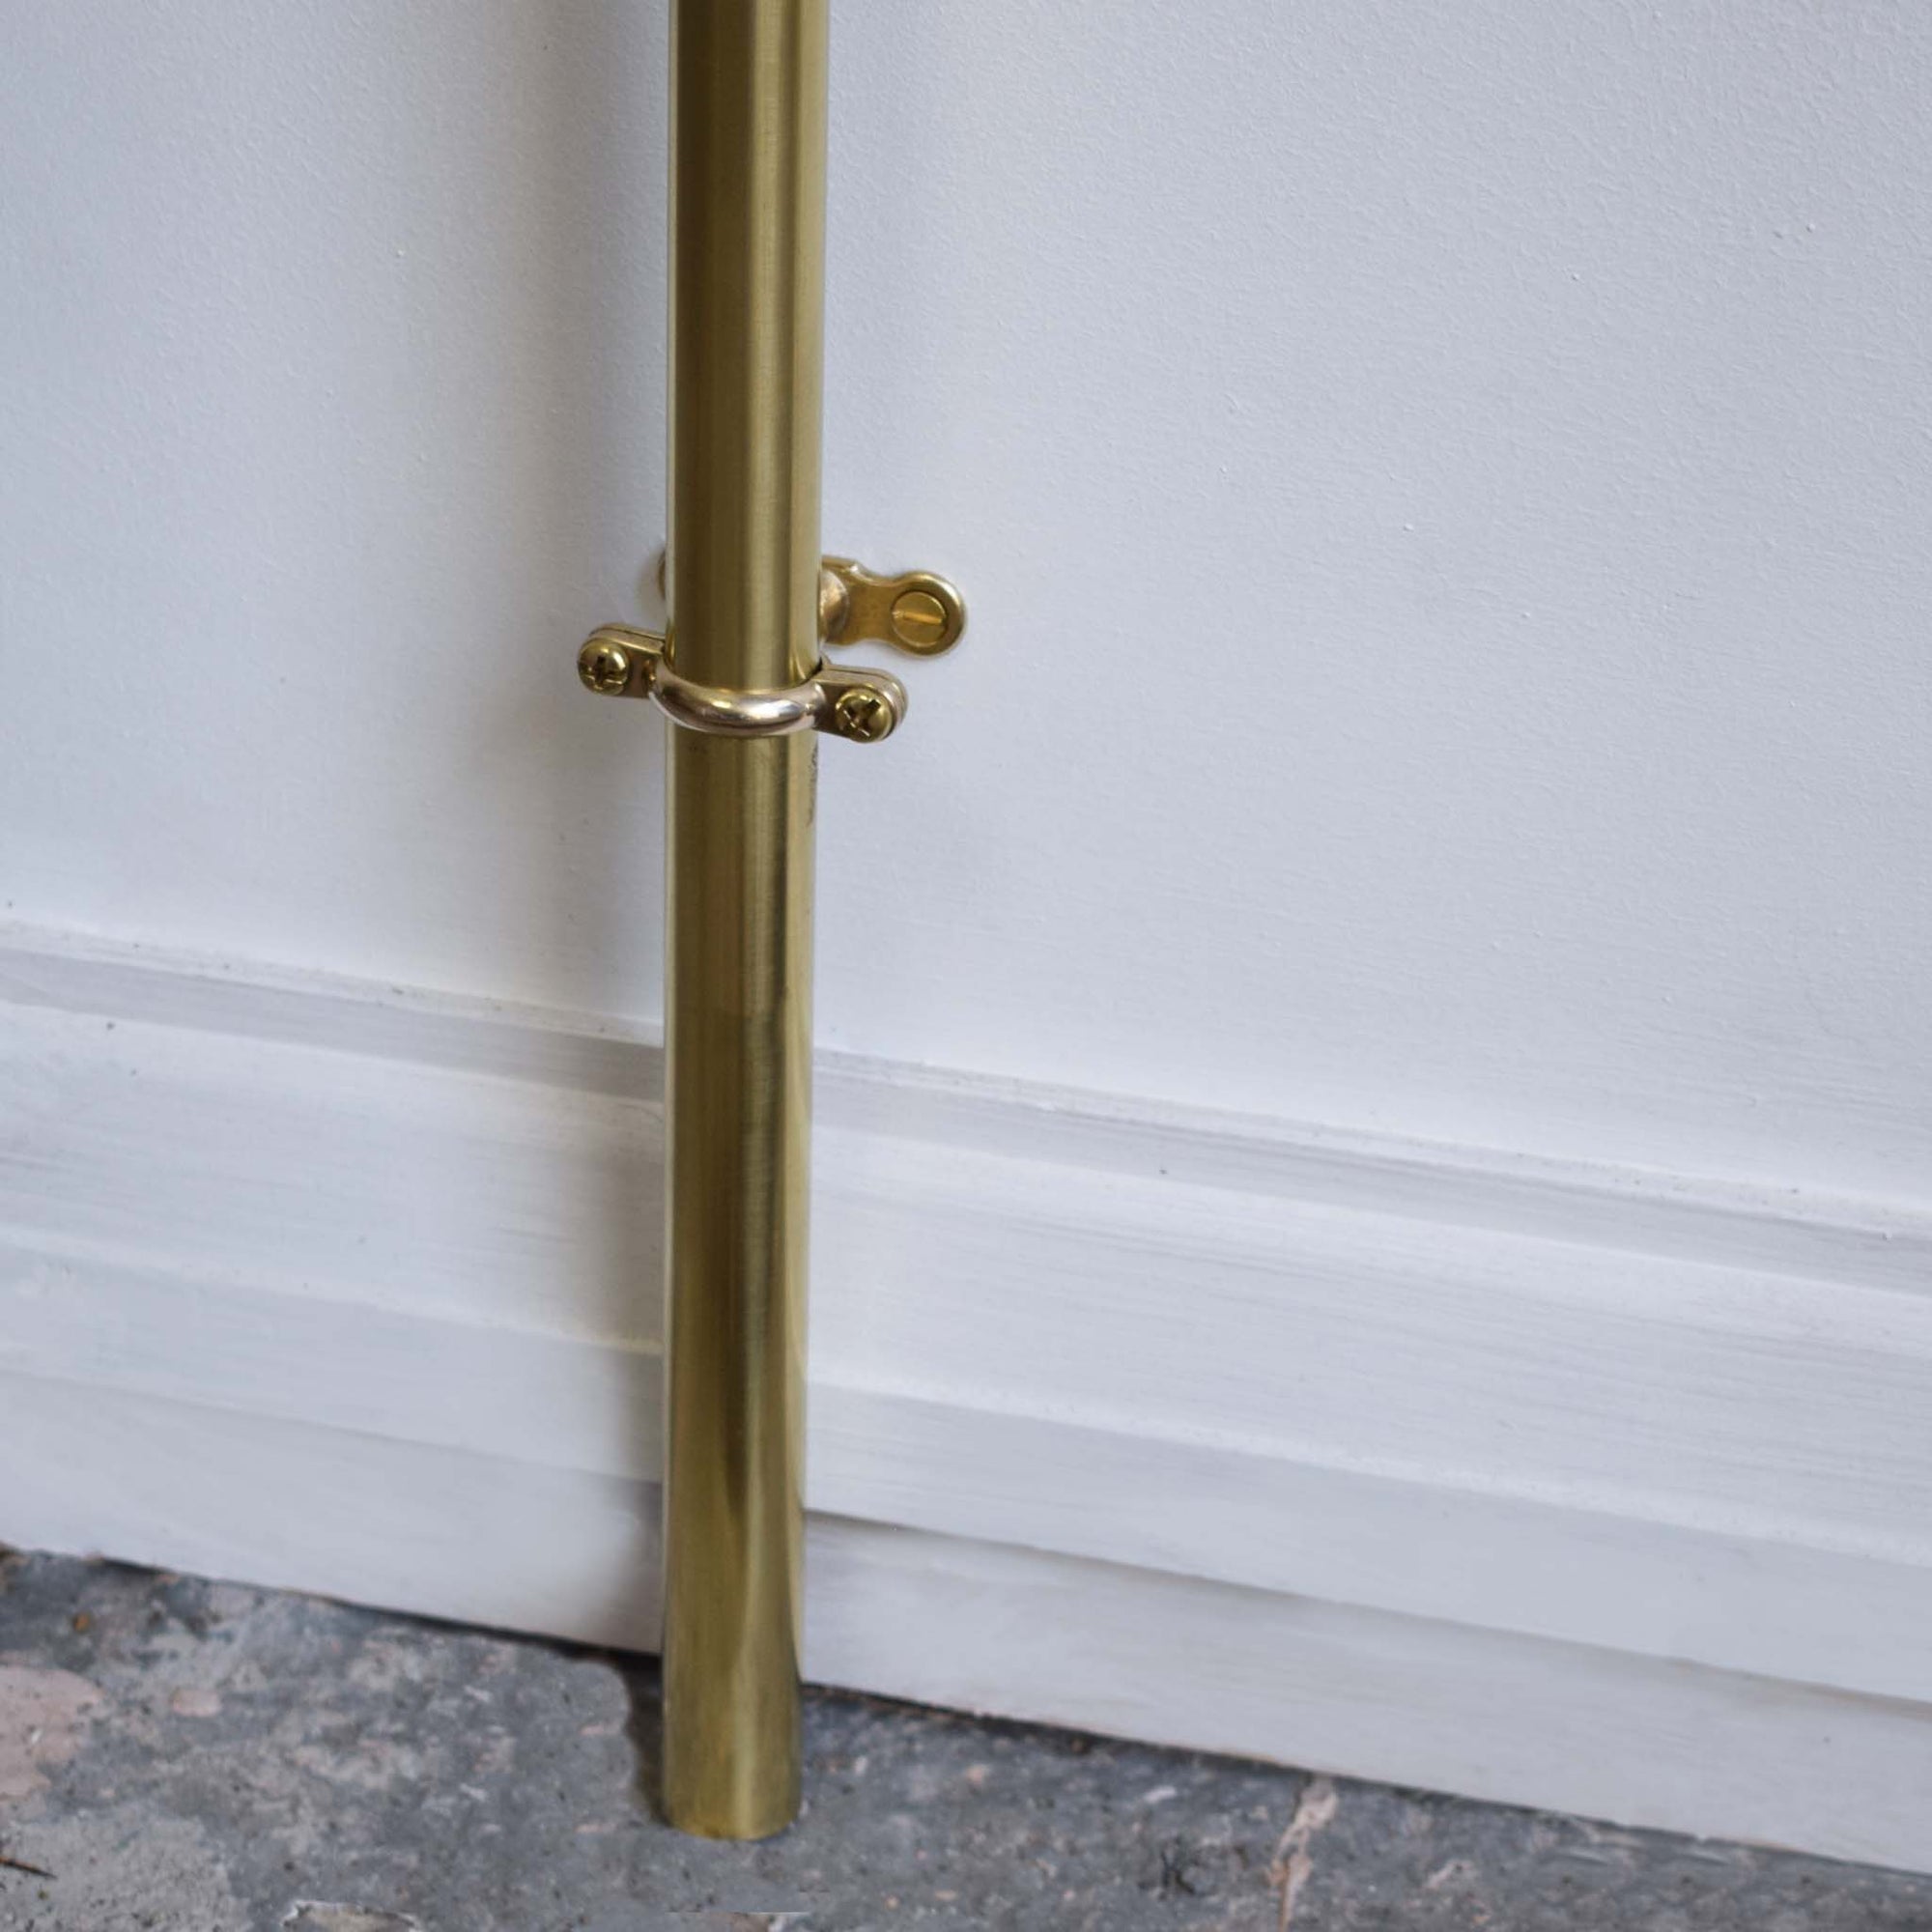 Freestanding shower designs available at Proper Copper Design